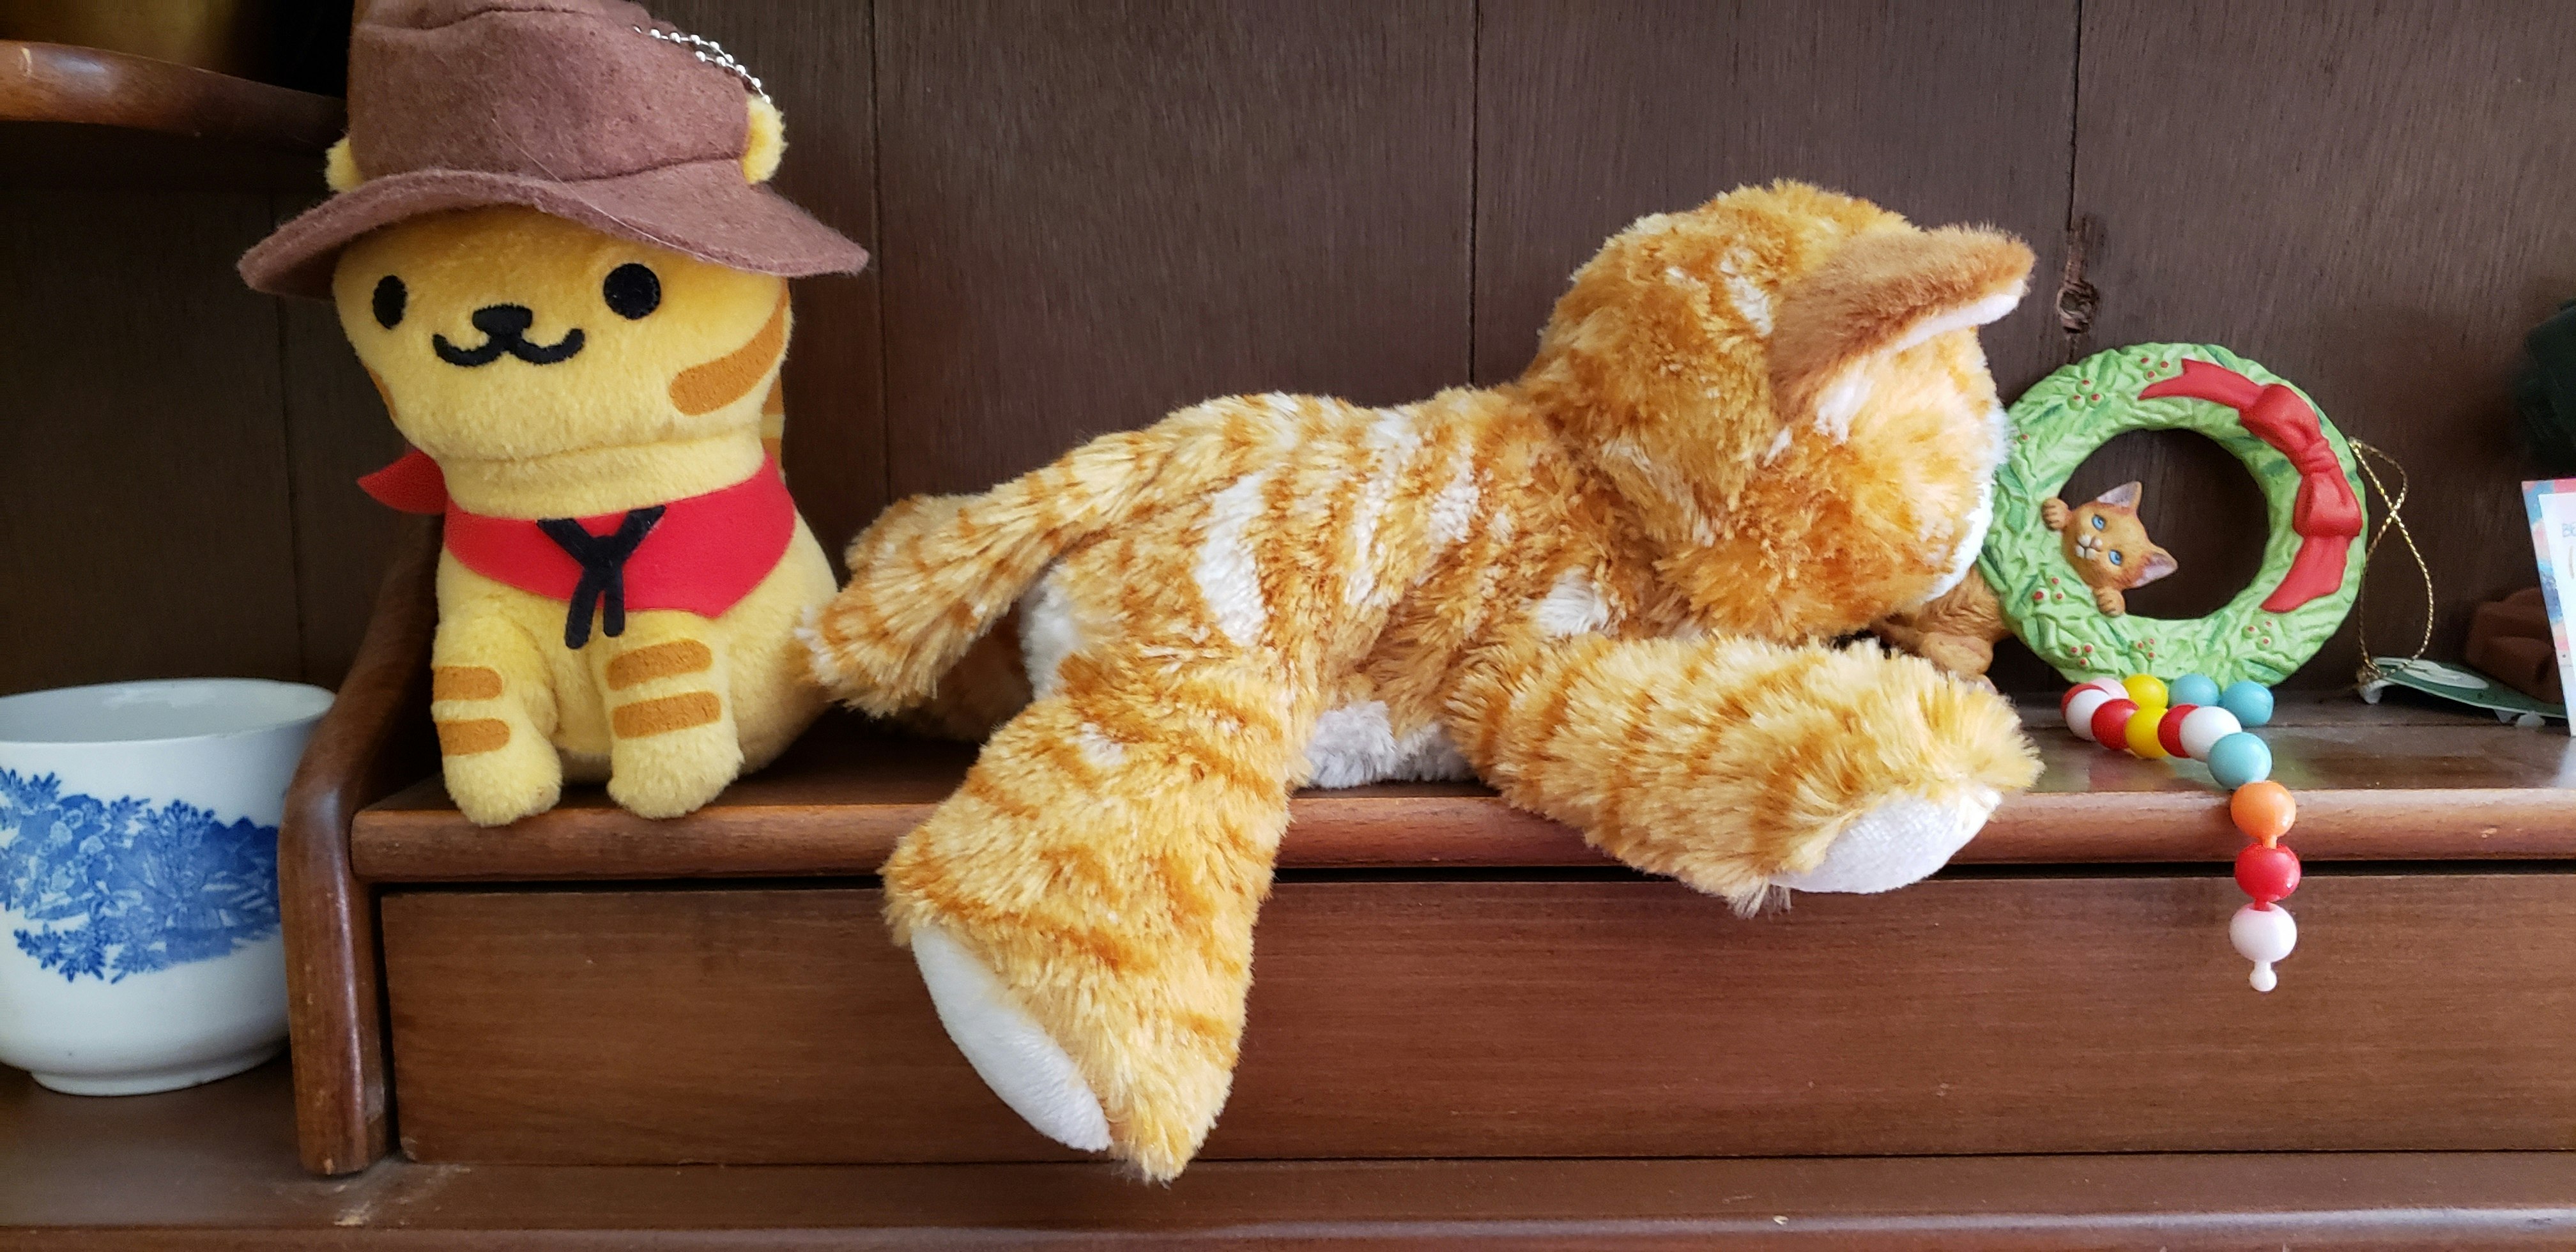 More stuffed animals left to comfort Emily.